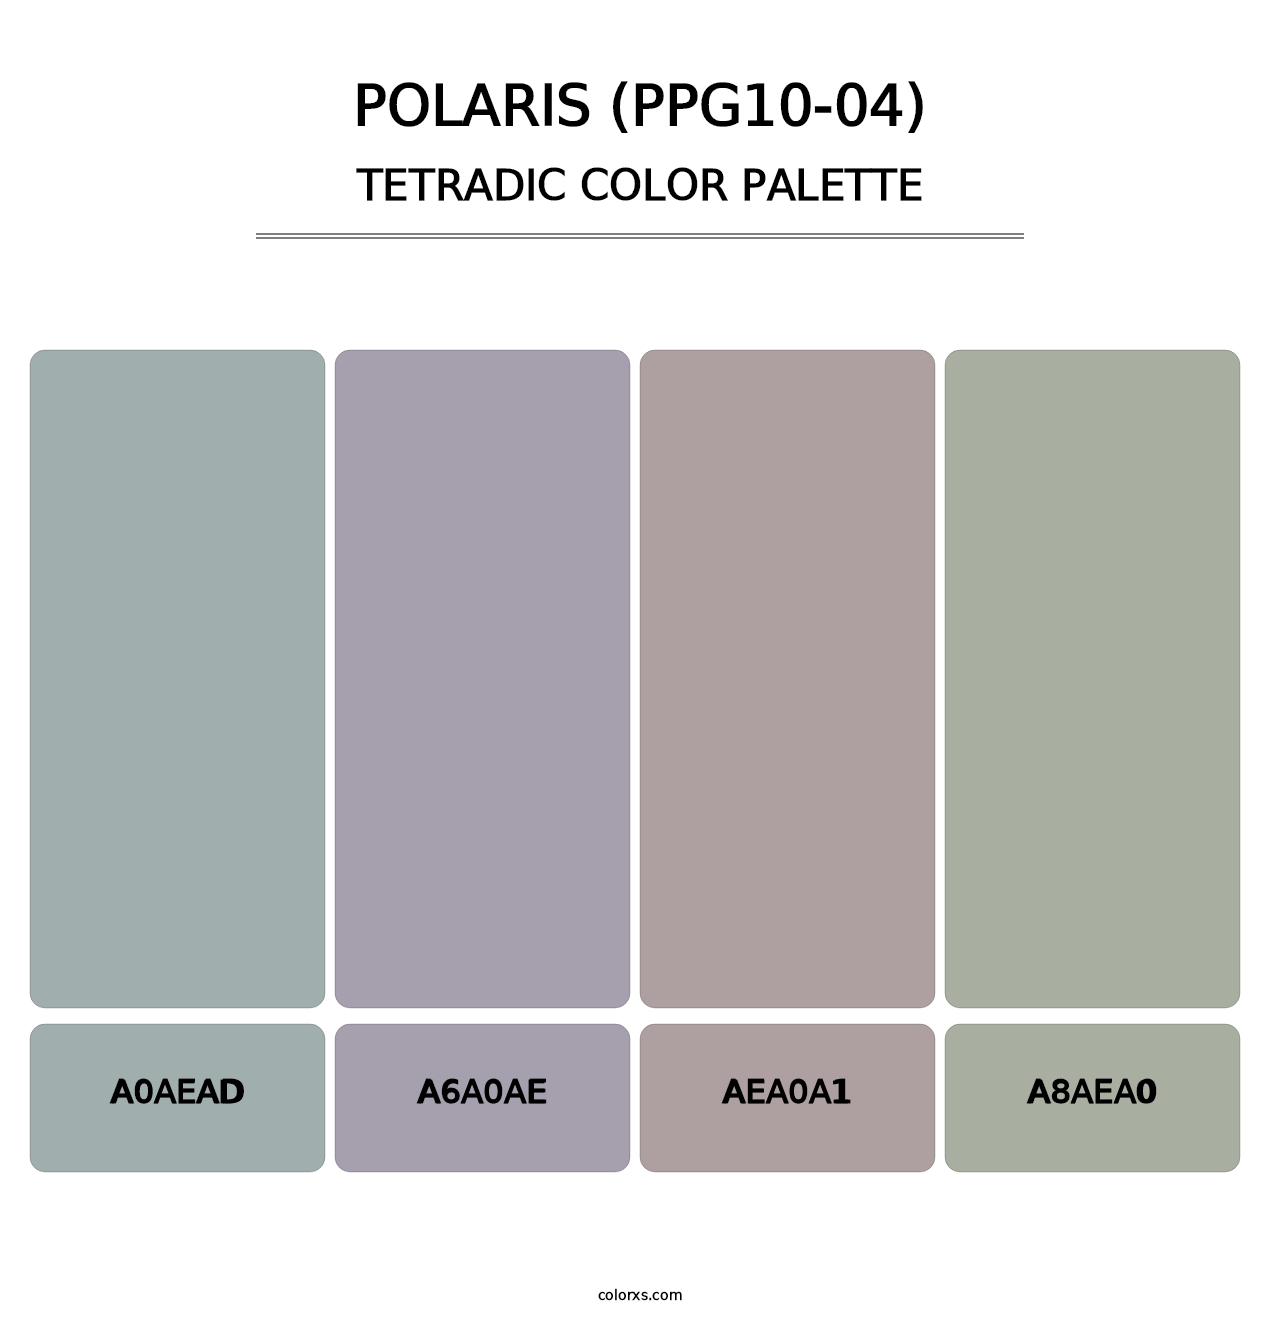 Polaris (PPG10-04) - Tetradic Color Palette